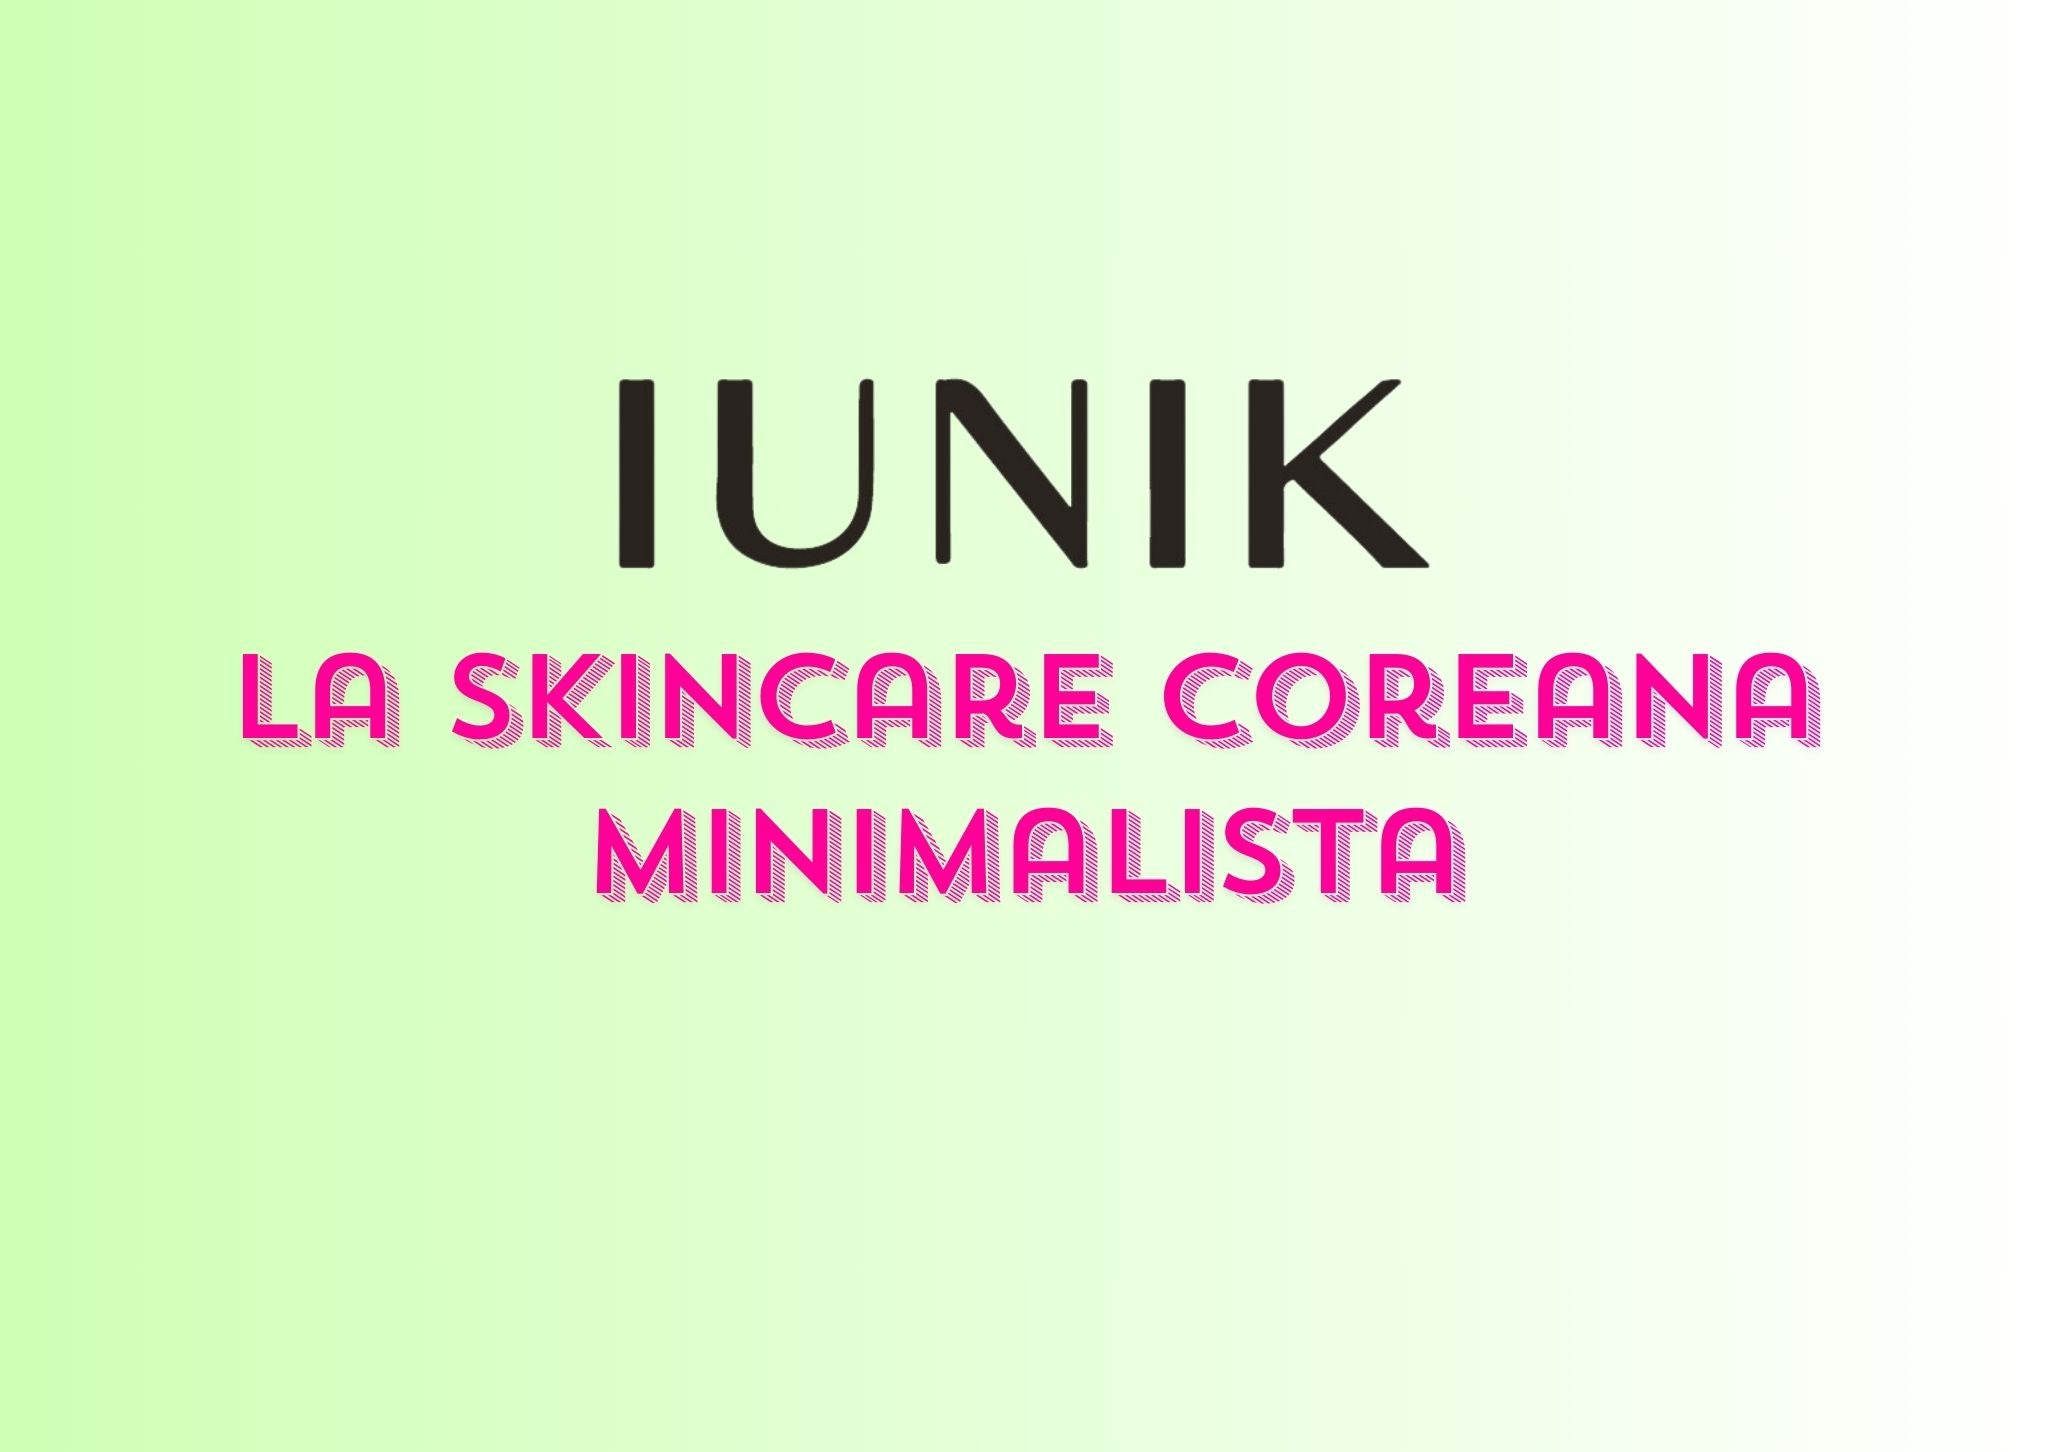 Iunik: la skincare coreana minimalista